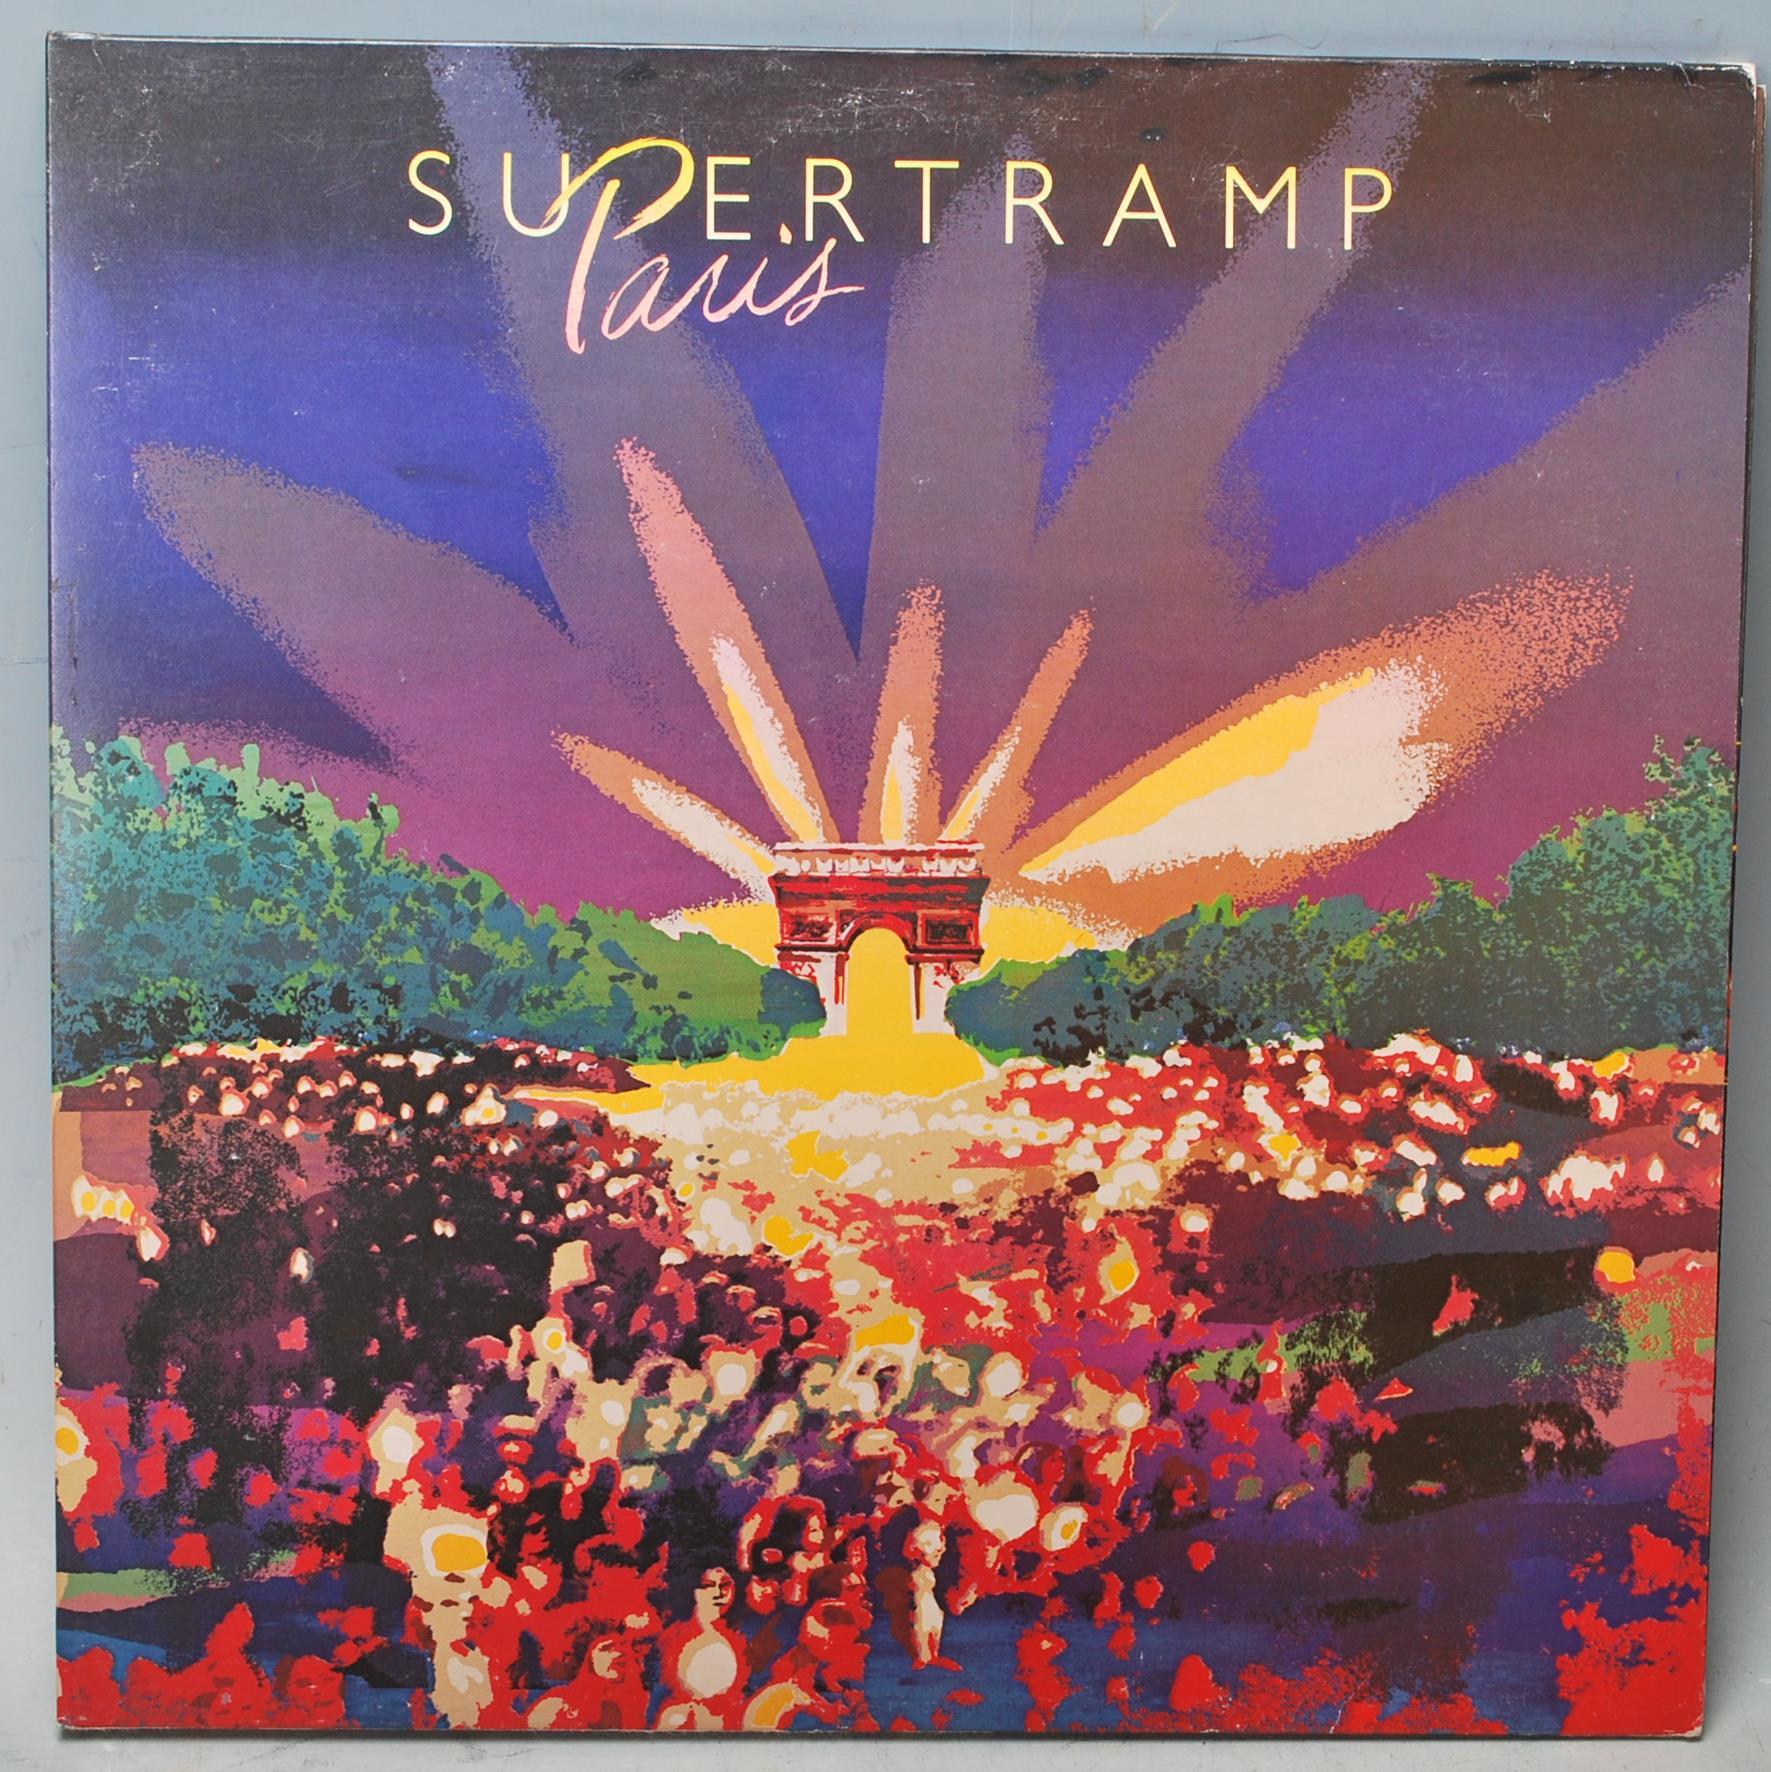 A vinyl LP long play record by Supertramp / Paris.